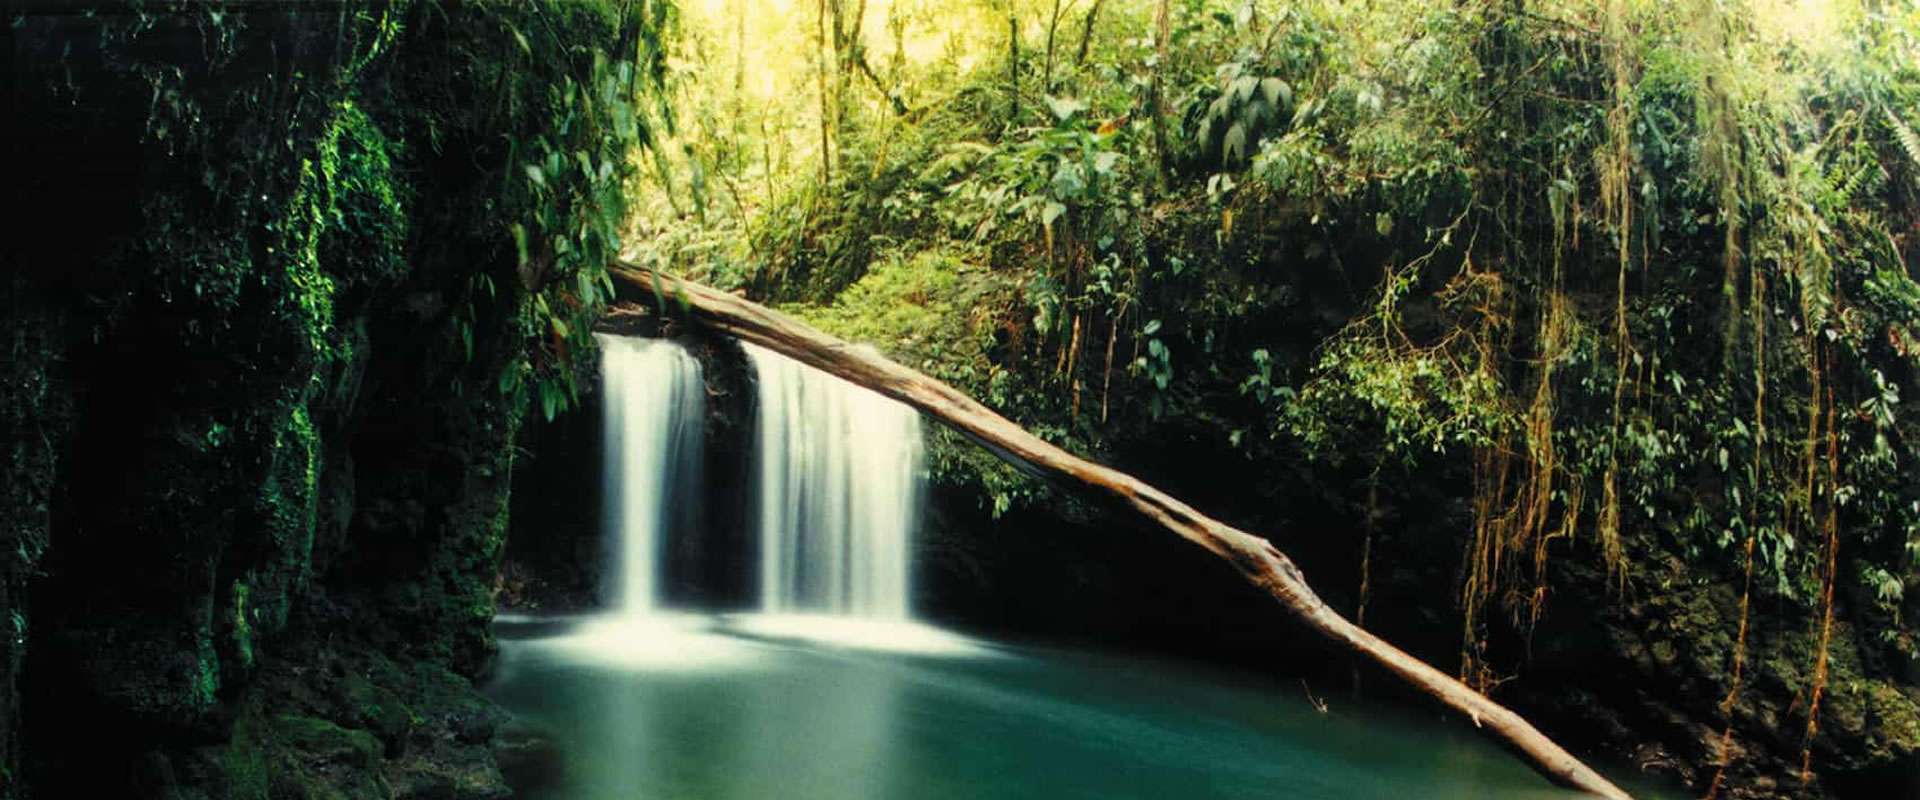 Tour de bosque Lluvioso Caribe Costa Rica  | Costa Rica Jade Tours